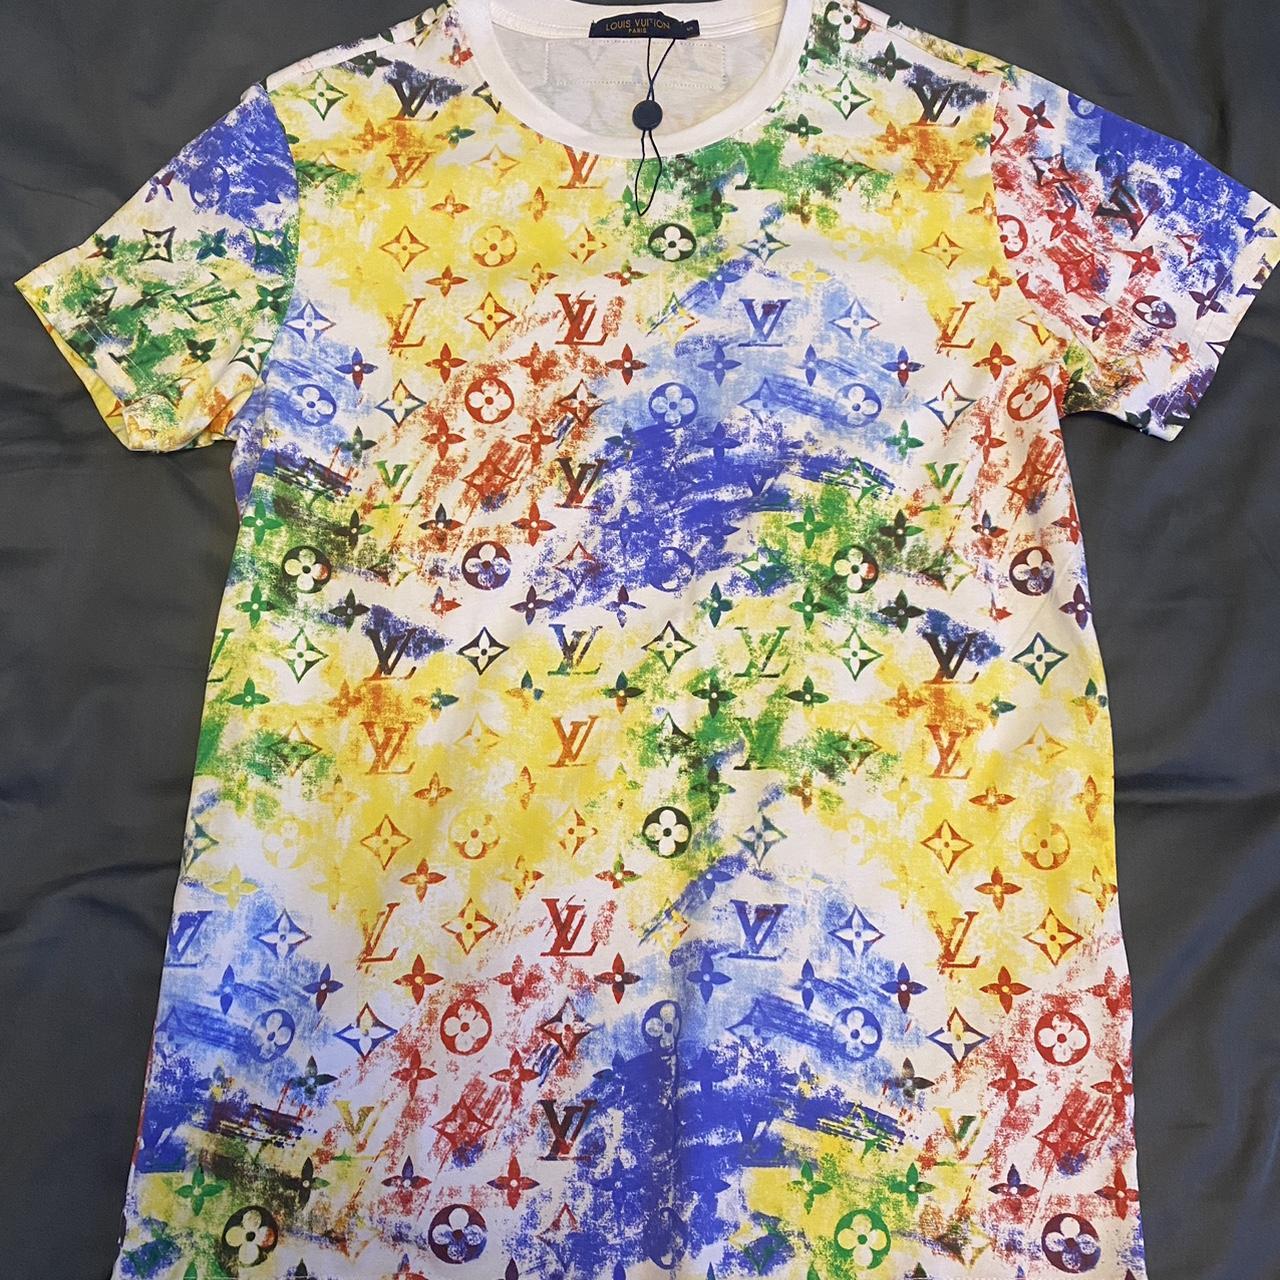 vuitton colorful shirt